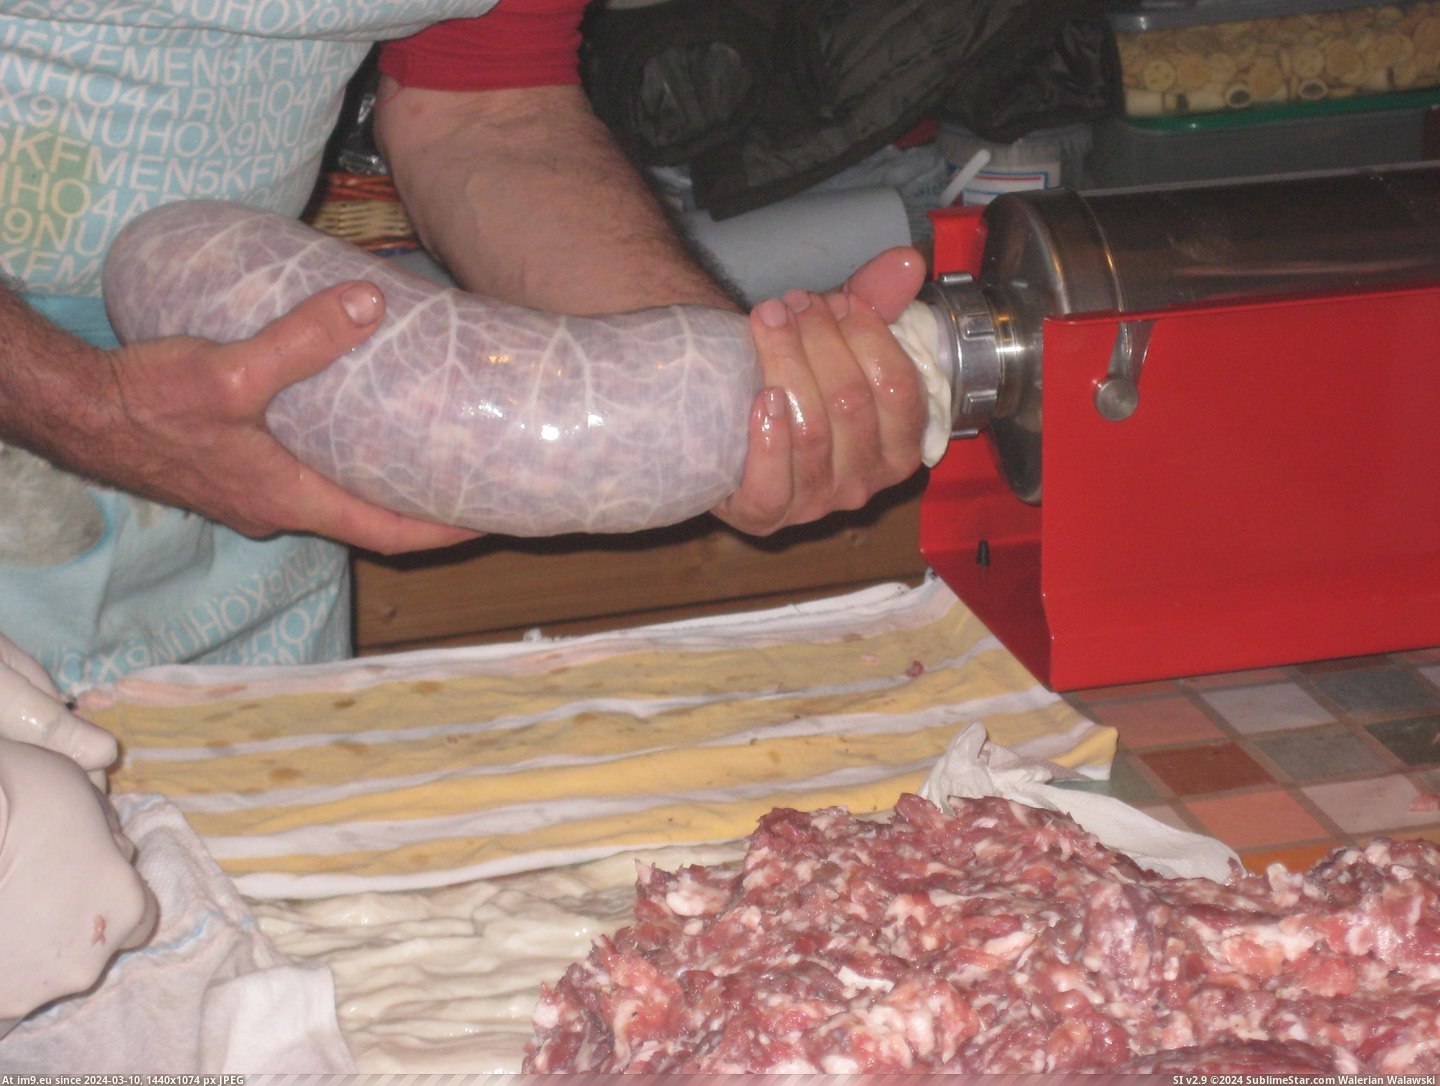 #Making #Homemade #Italy [Pics] Making homemade salami in Italy 2 Pic. (Изображение из альбом My r/PICS favs))